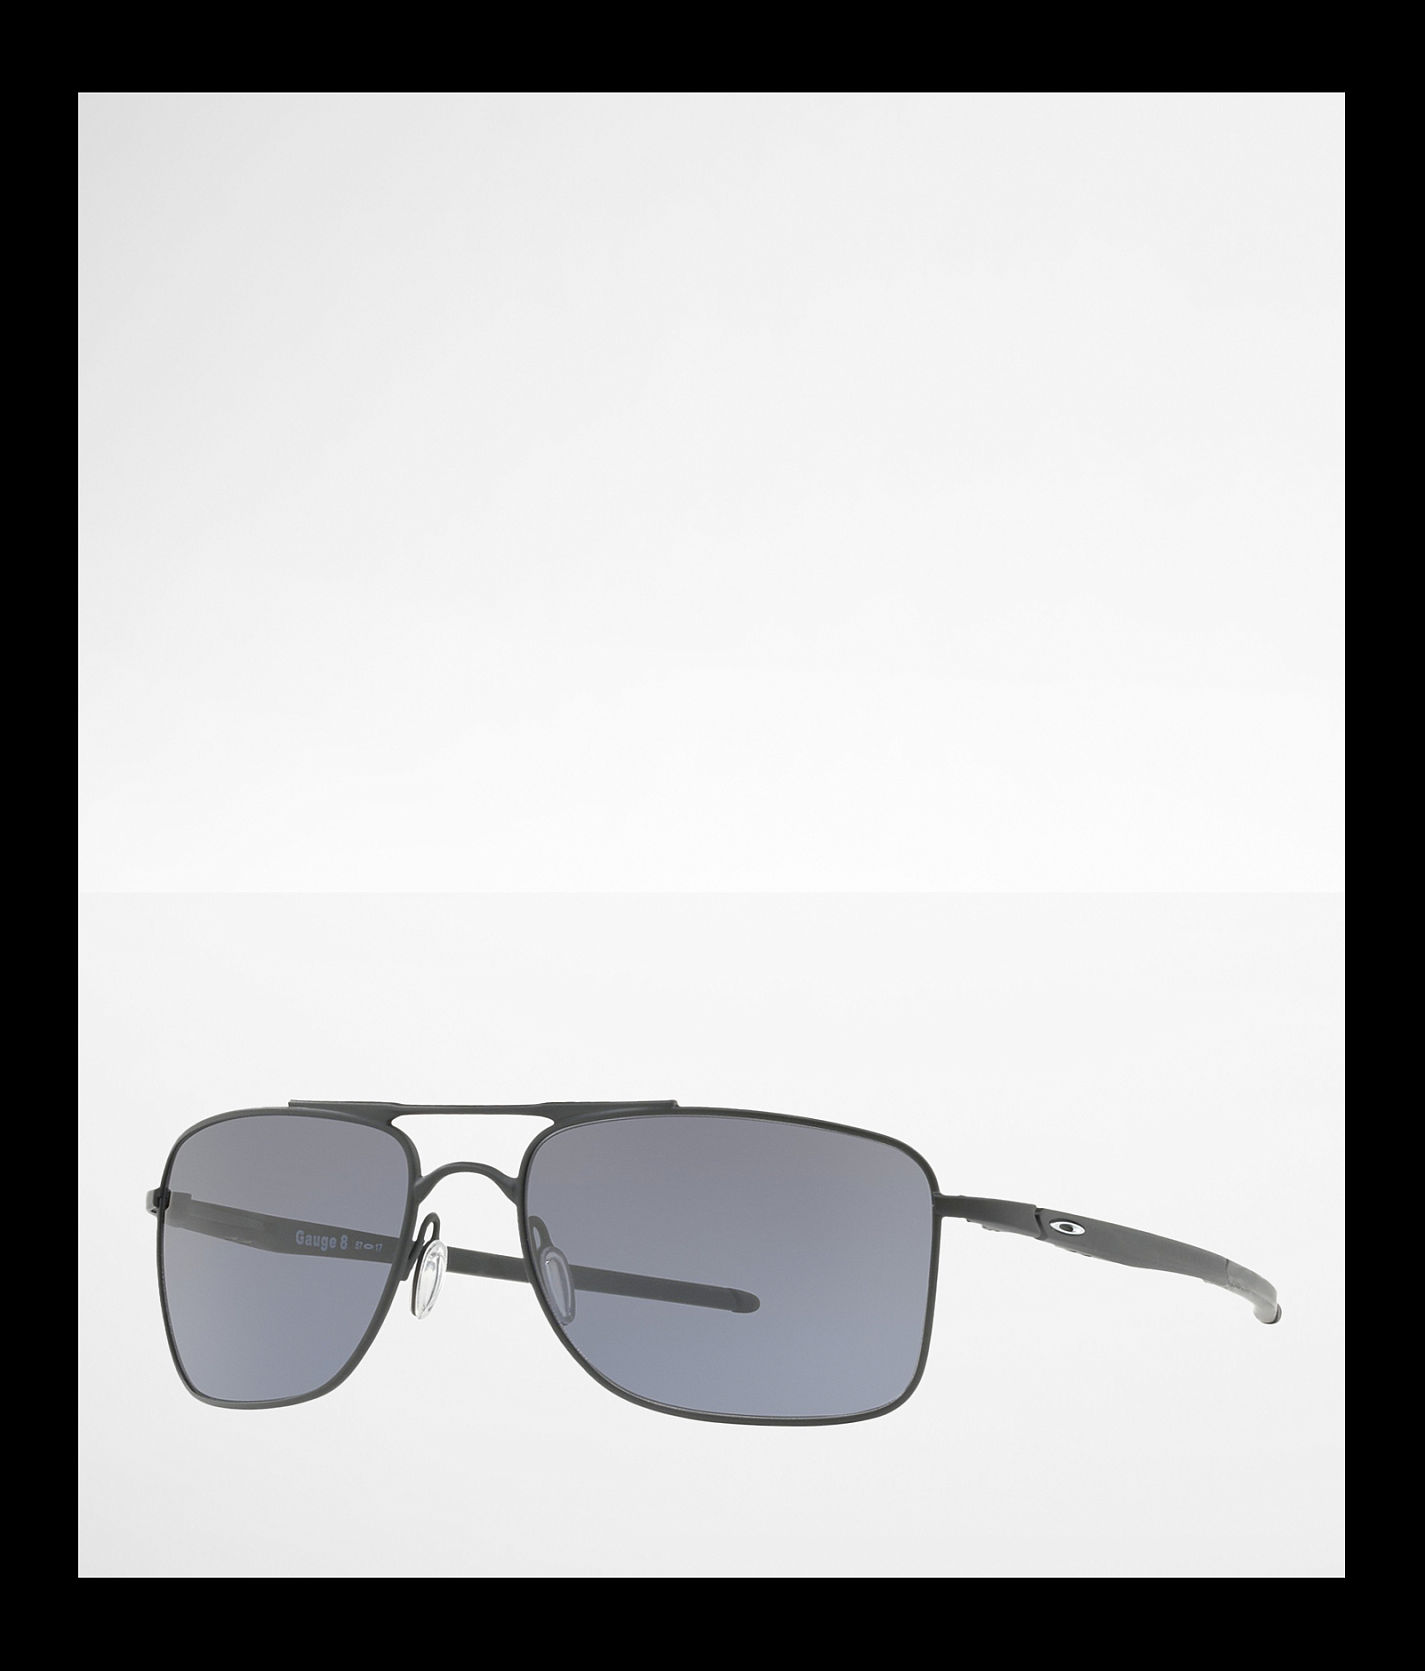 Oakley Gauge 8 Sunglasses - Men's Sunglasses & Glasses in Matte Black |  Buckle